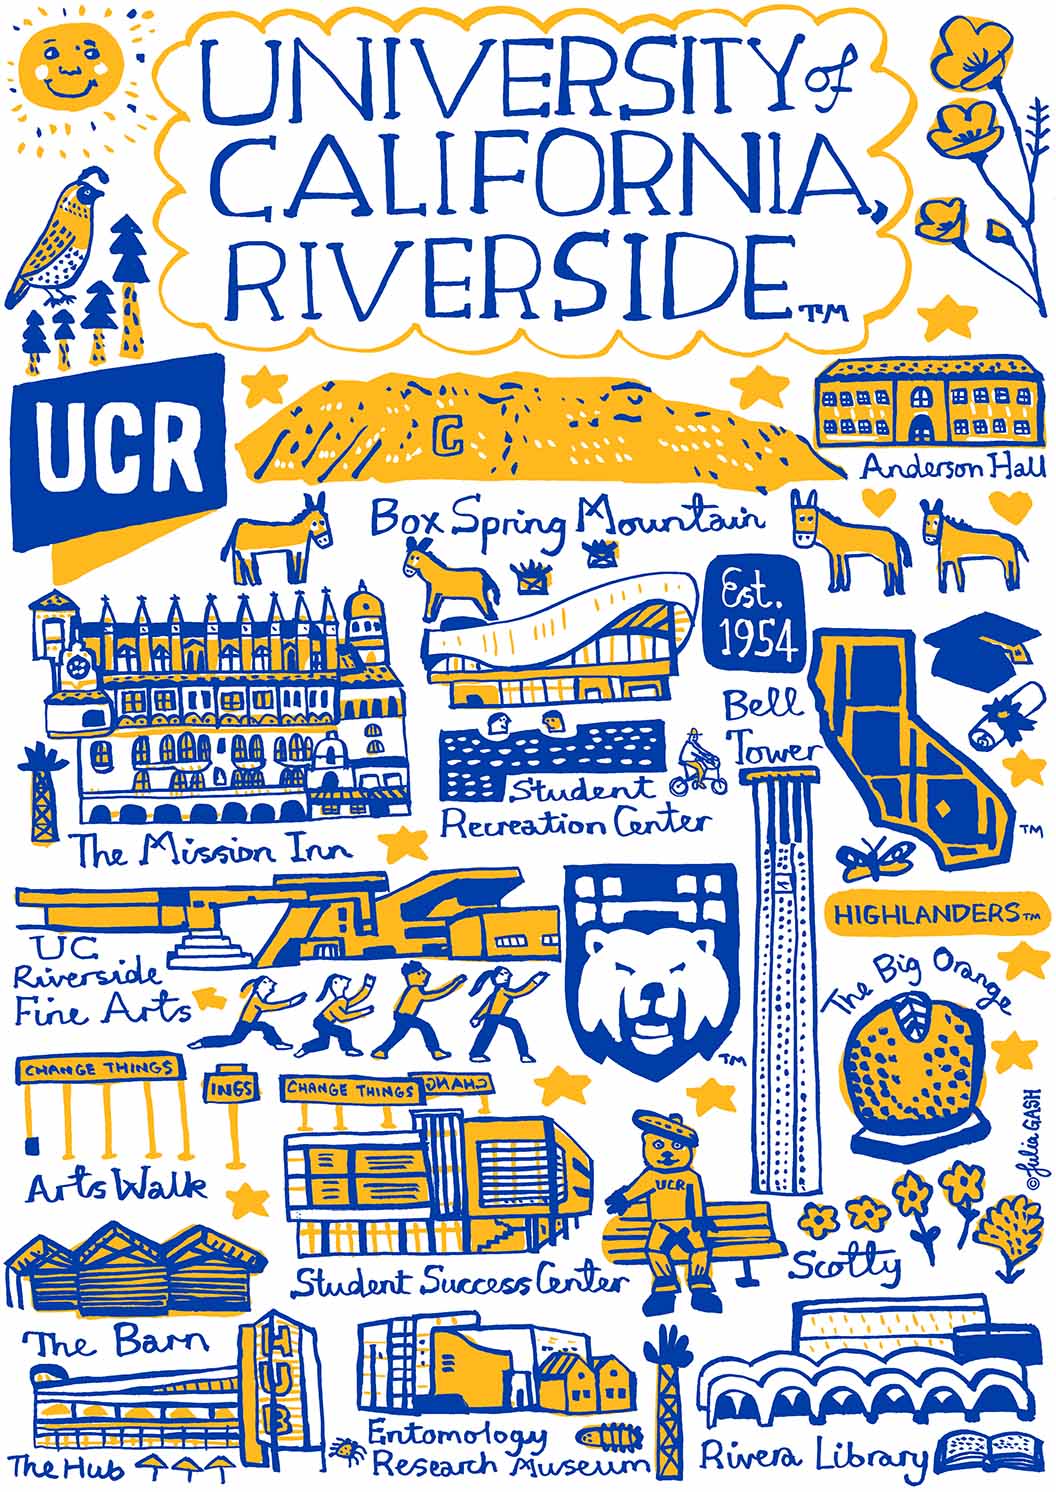 UC Riverside Design by Julia Gash